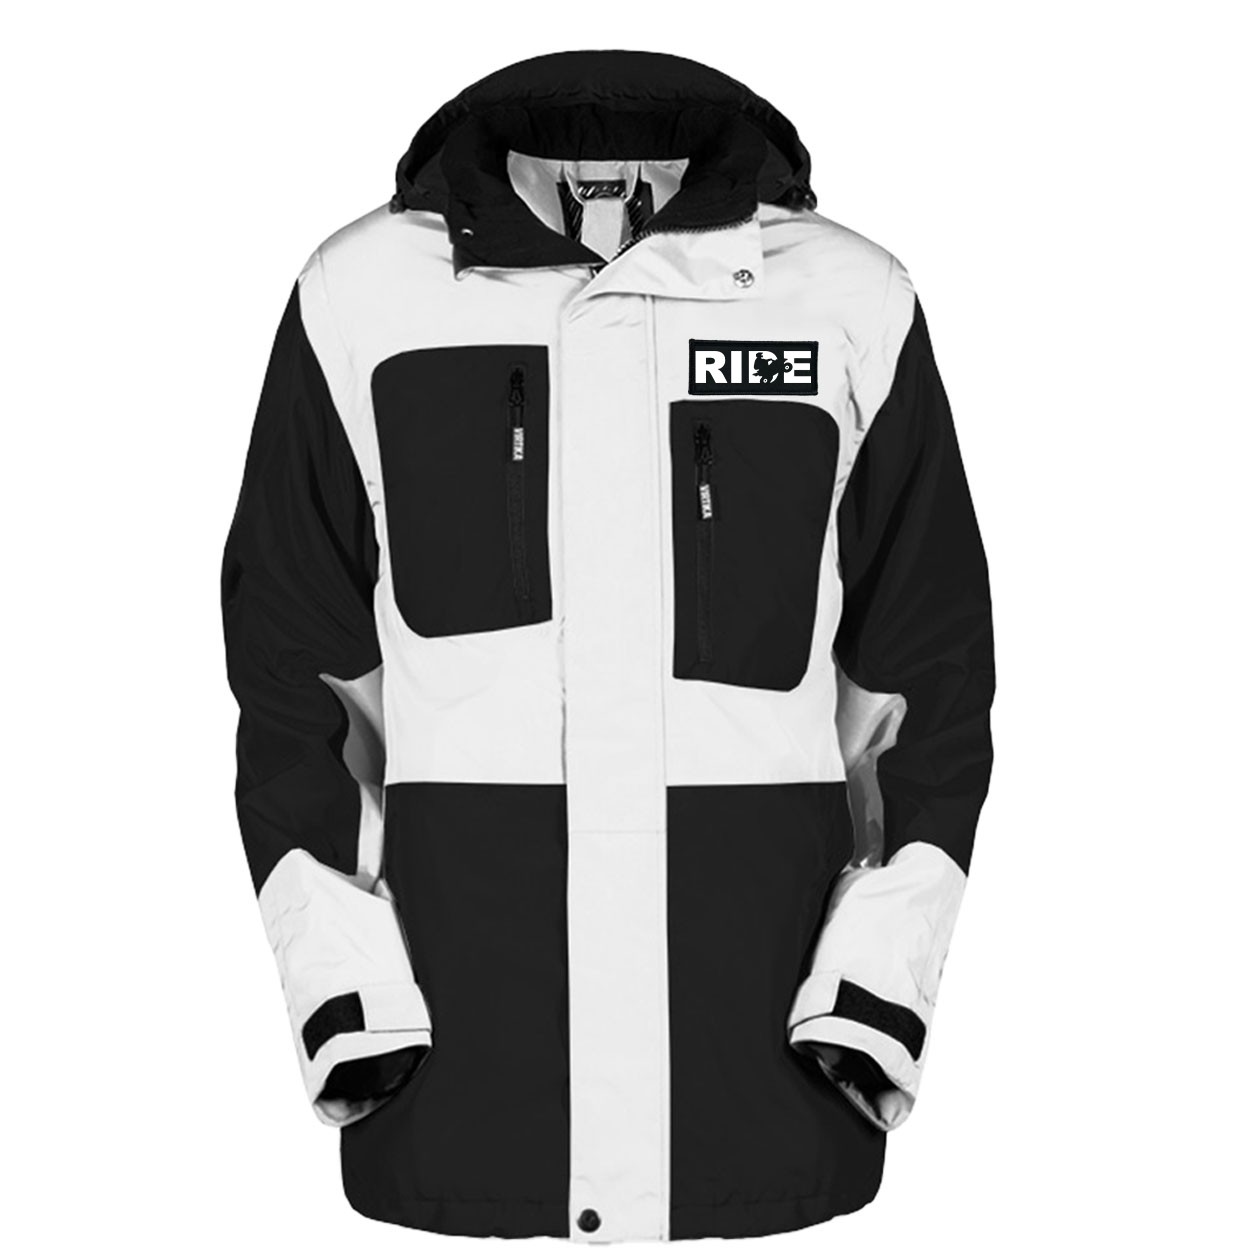 Ride ATV Logo Classic Woven Patch Pro Snowboard Jacket (Black/White)